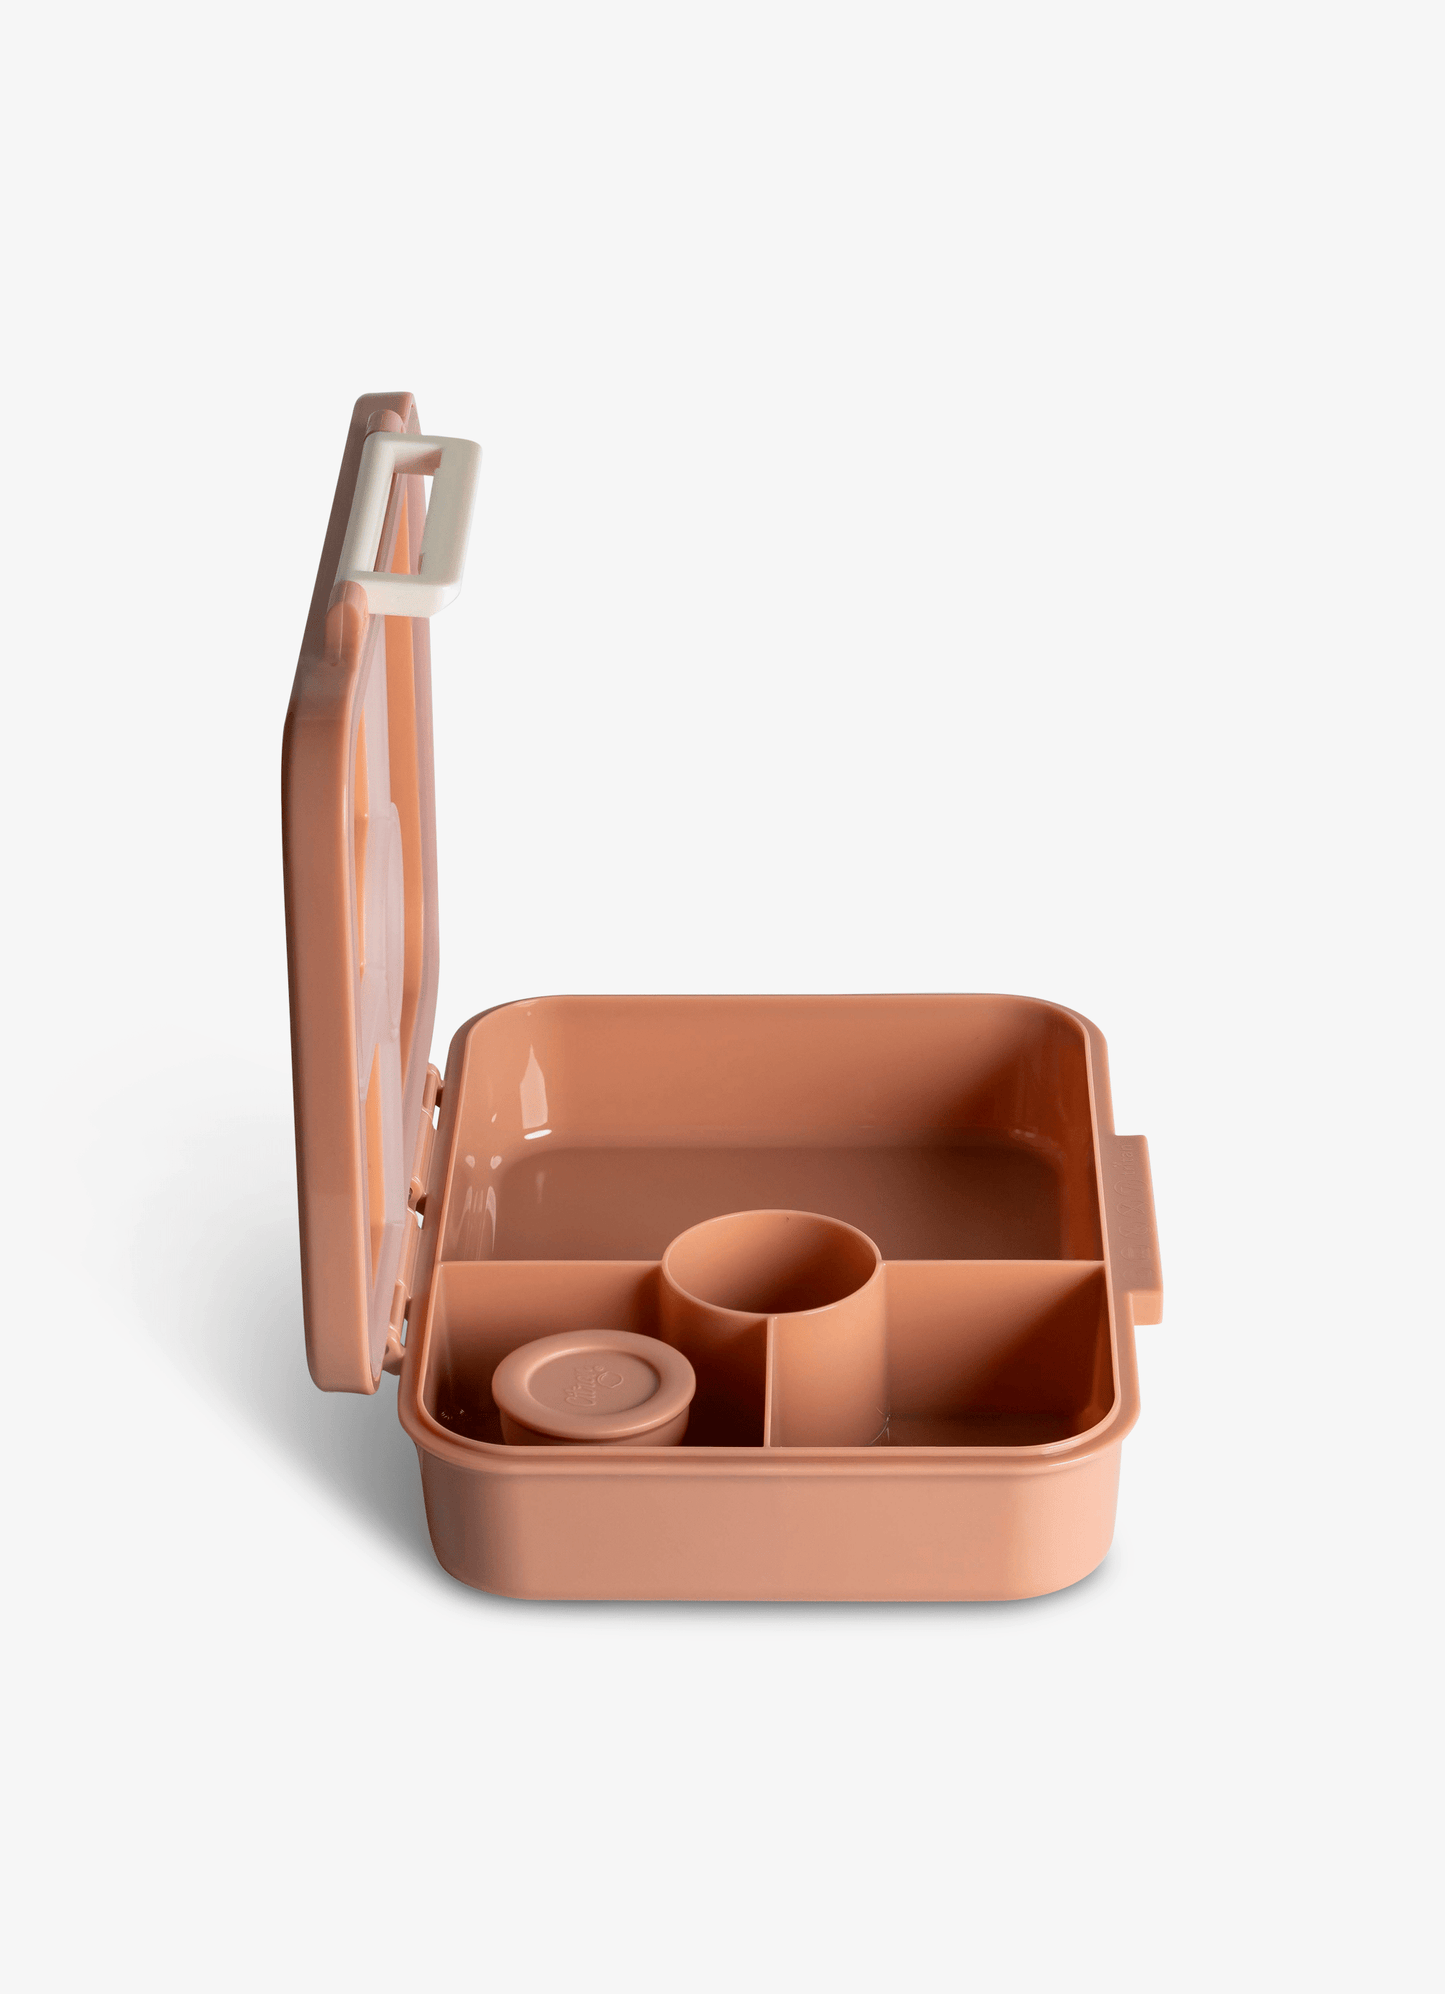 Incredible Tritan Lunch Box - 4 Compartments - Unicorn Blush Pink